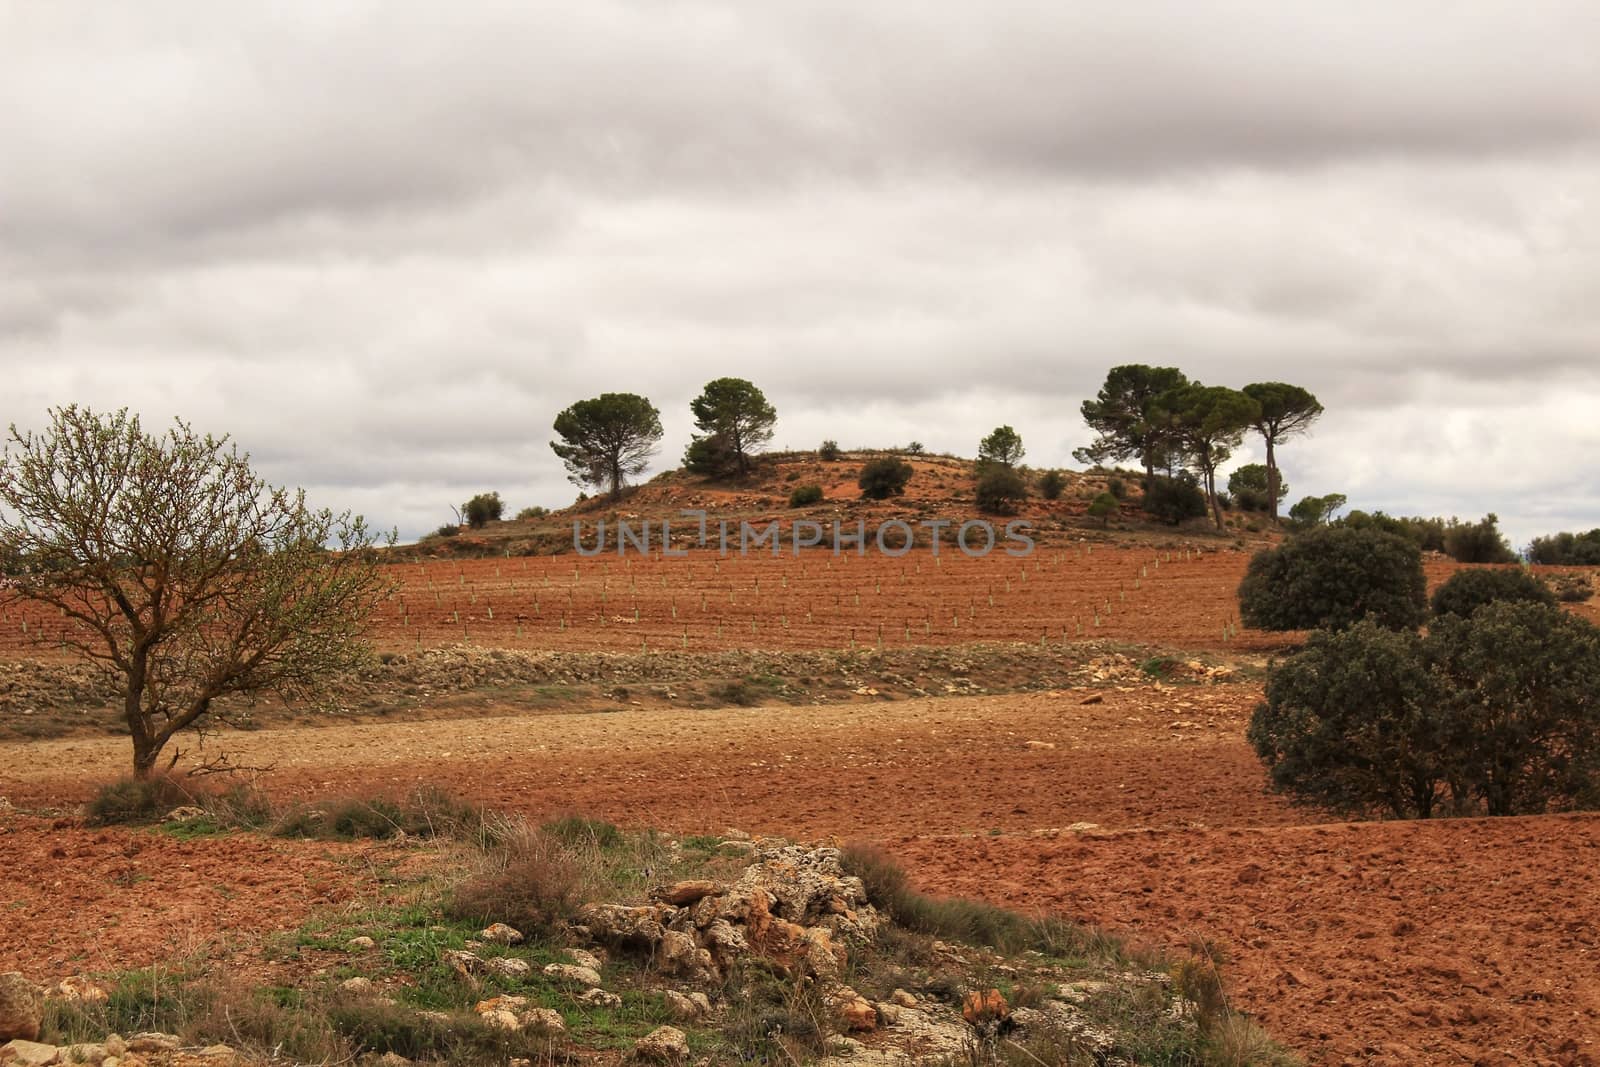 Landscape with cloudy sky and farm field in Castilla La Mancha, Spain